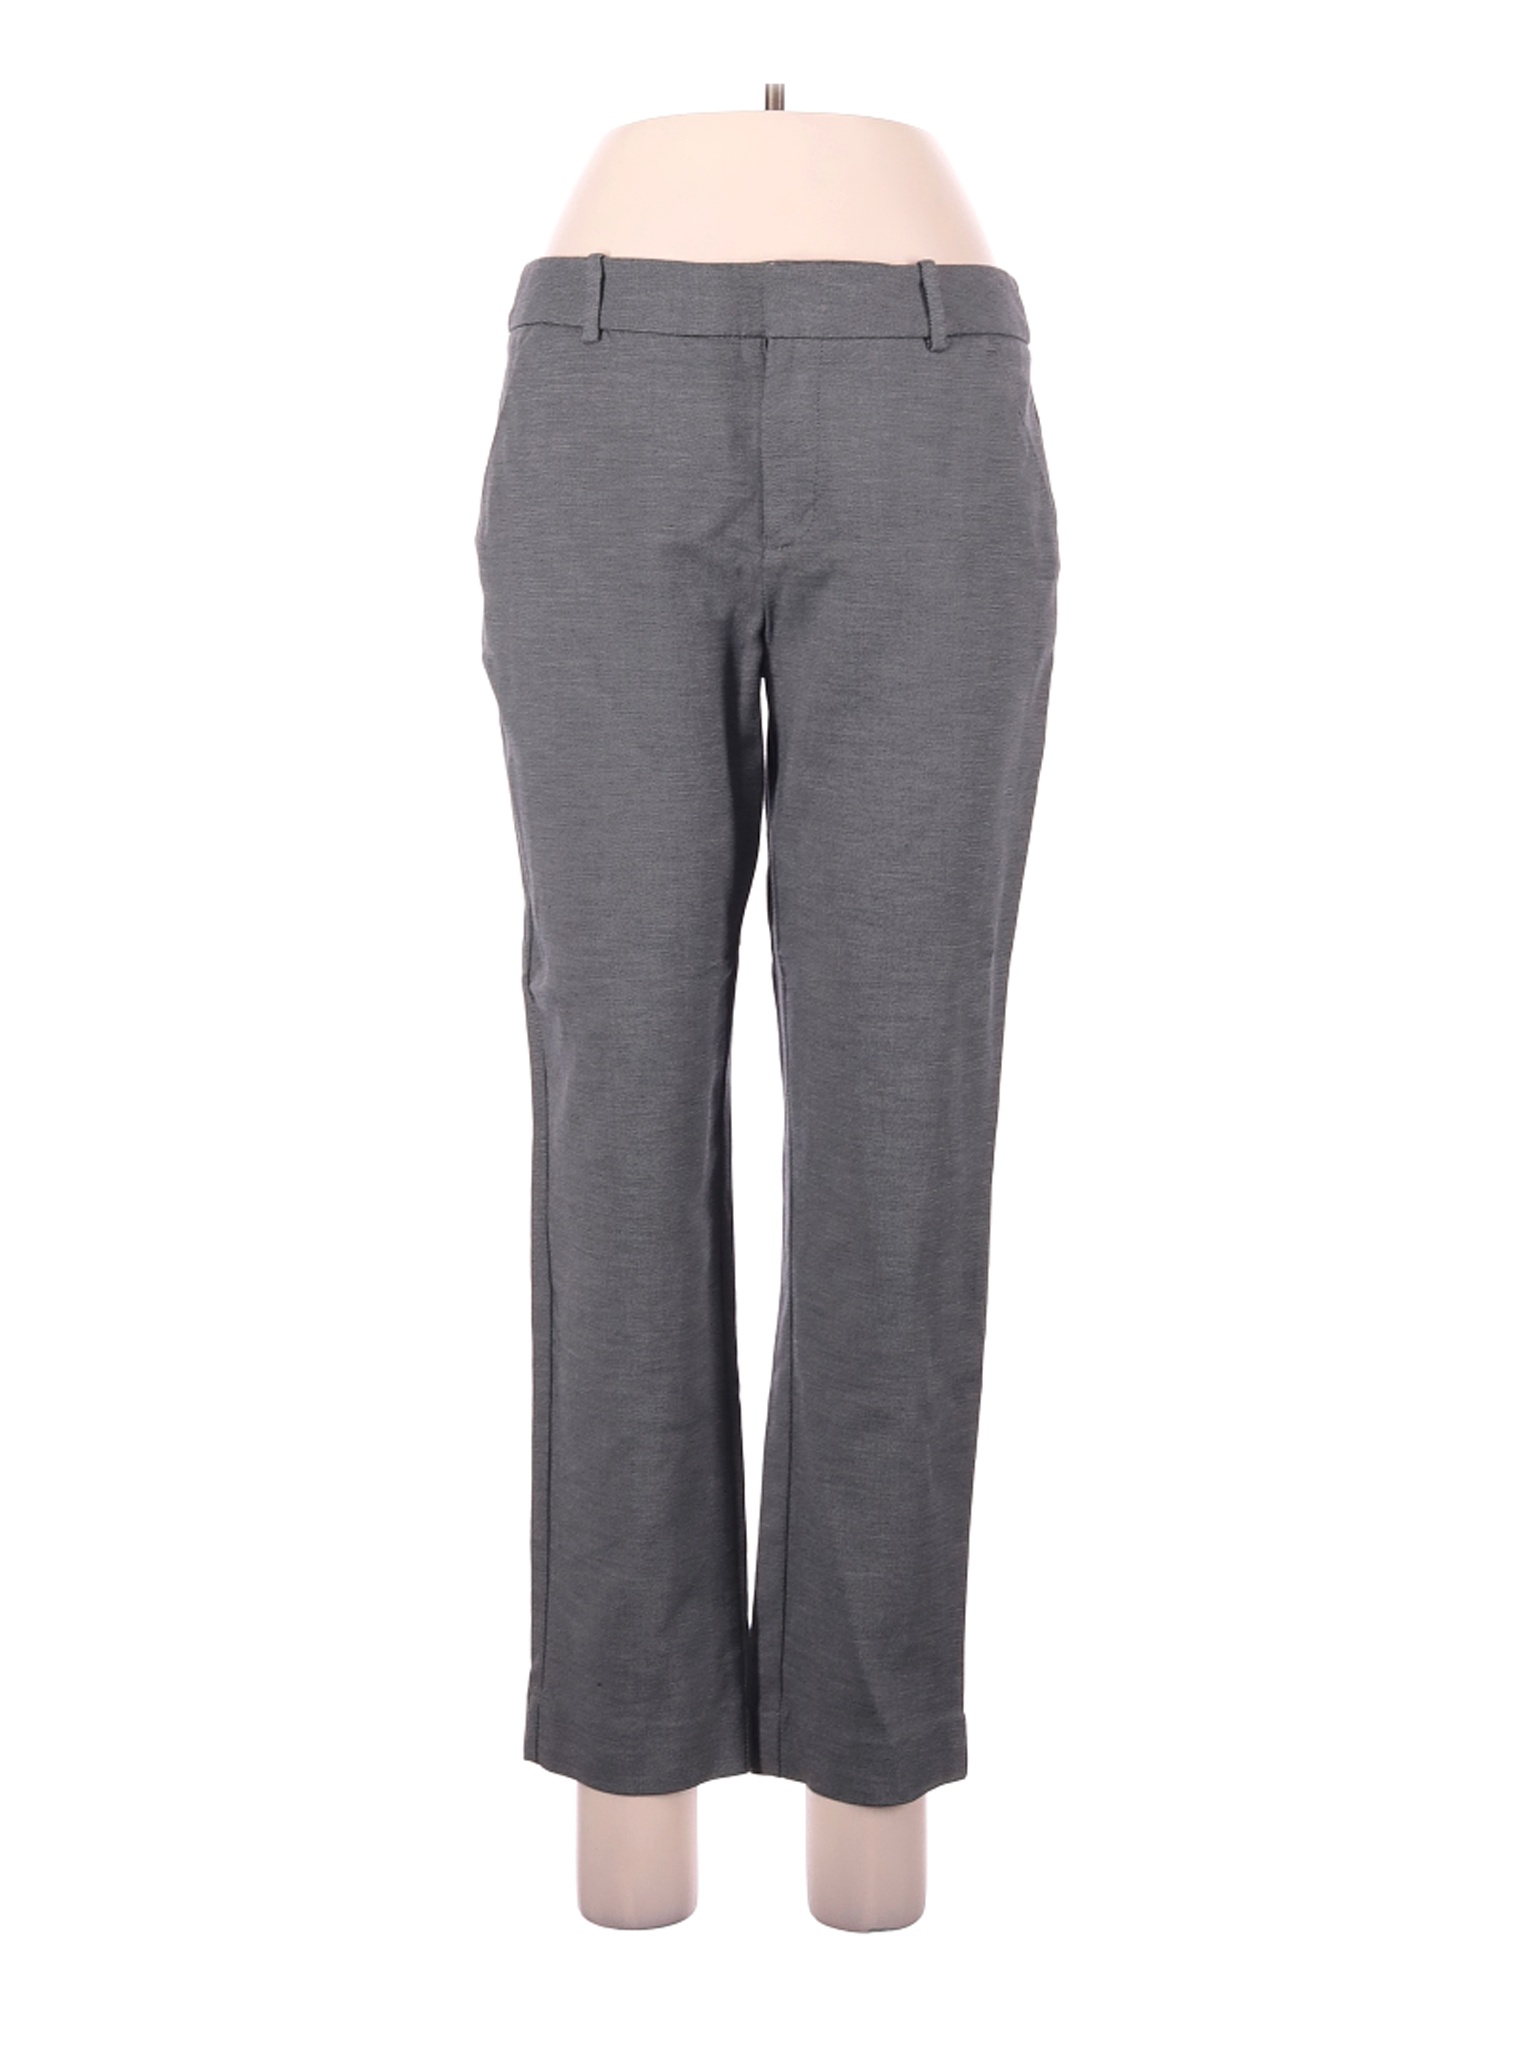 Merona Women Gray Dress Pants 8 | eBay